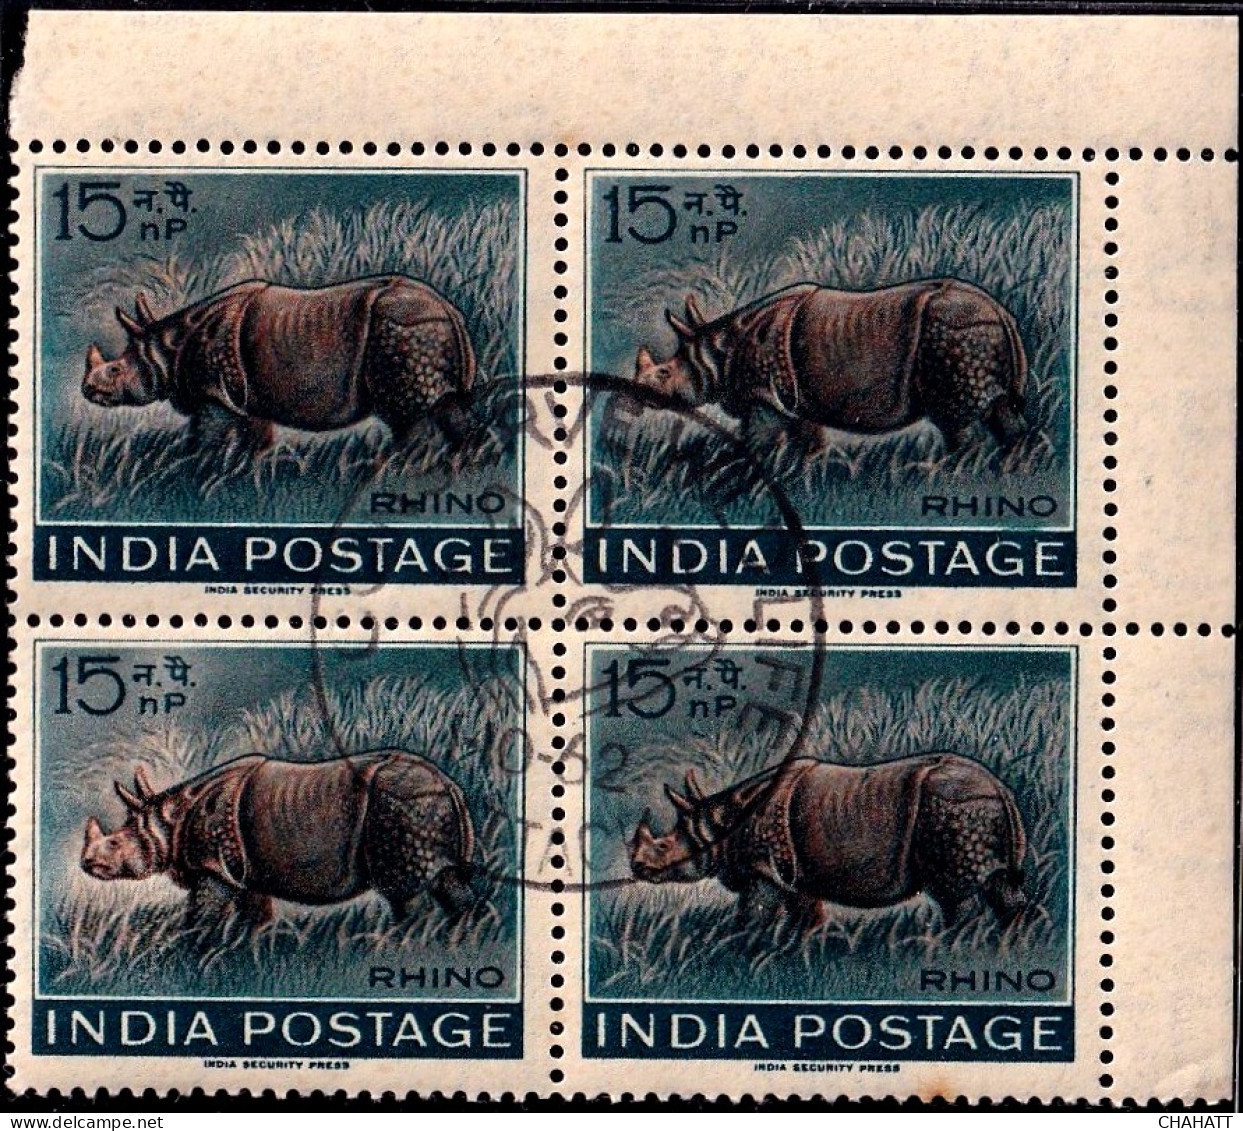 INDIA-1962- WILDLIFE WEEK- RHINOCEROS- BLOCK OF 4 WITH PICTORIAL CANCEL- ERROR-DRY PRINT-"BHARAT" OMITTED-MNH-IE-66-2 - Variétés Et Curiosités